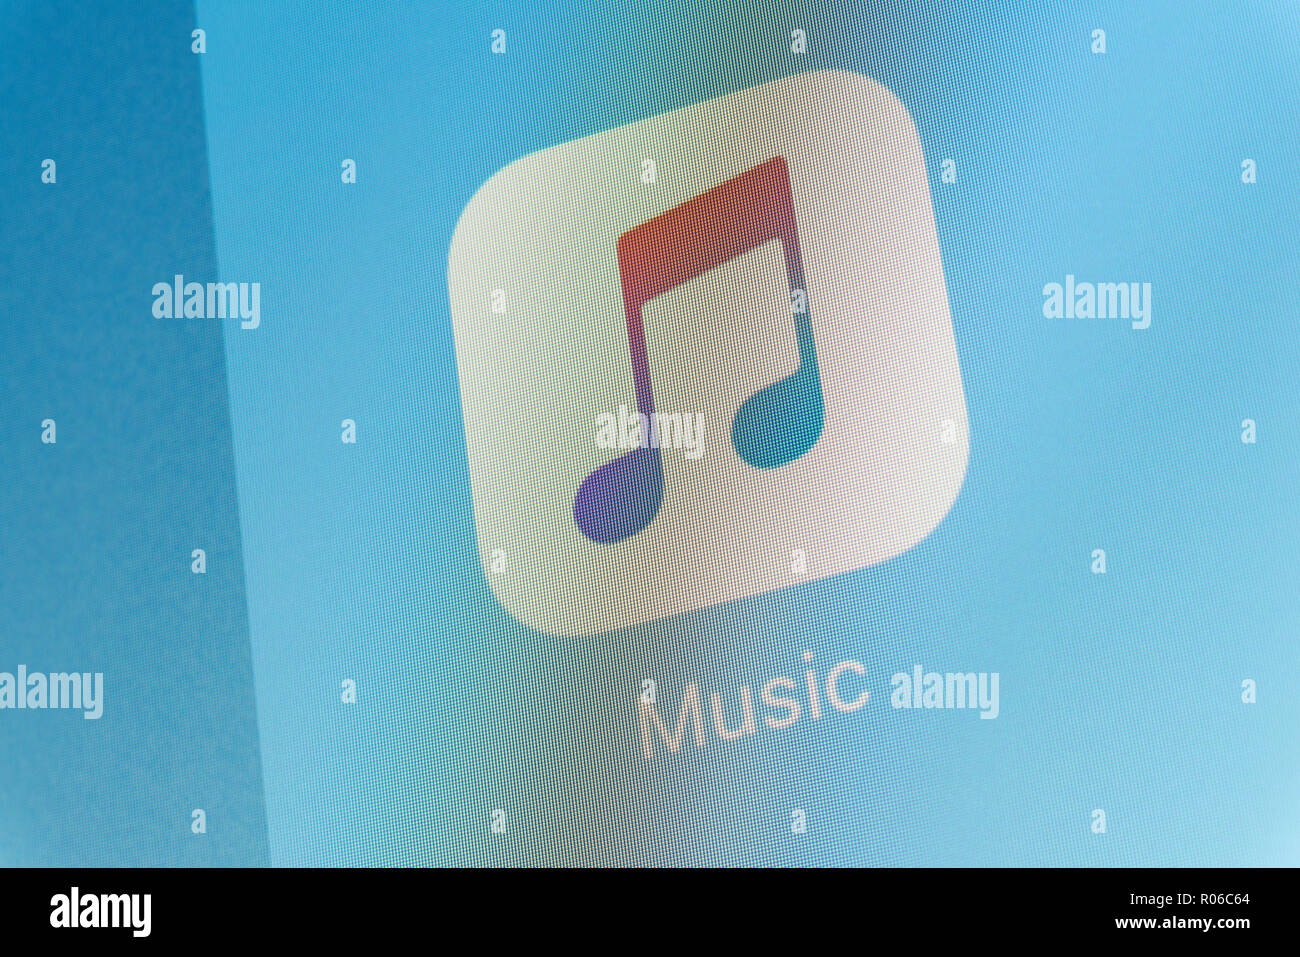 Apple Music App on cellphone screen Stock Photo